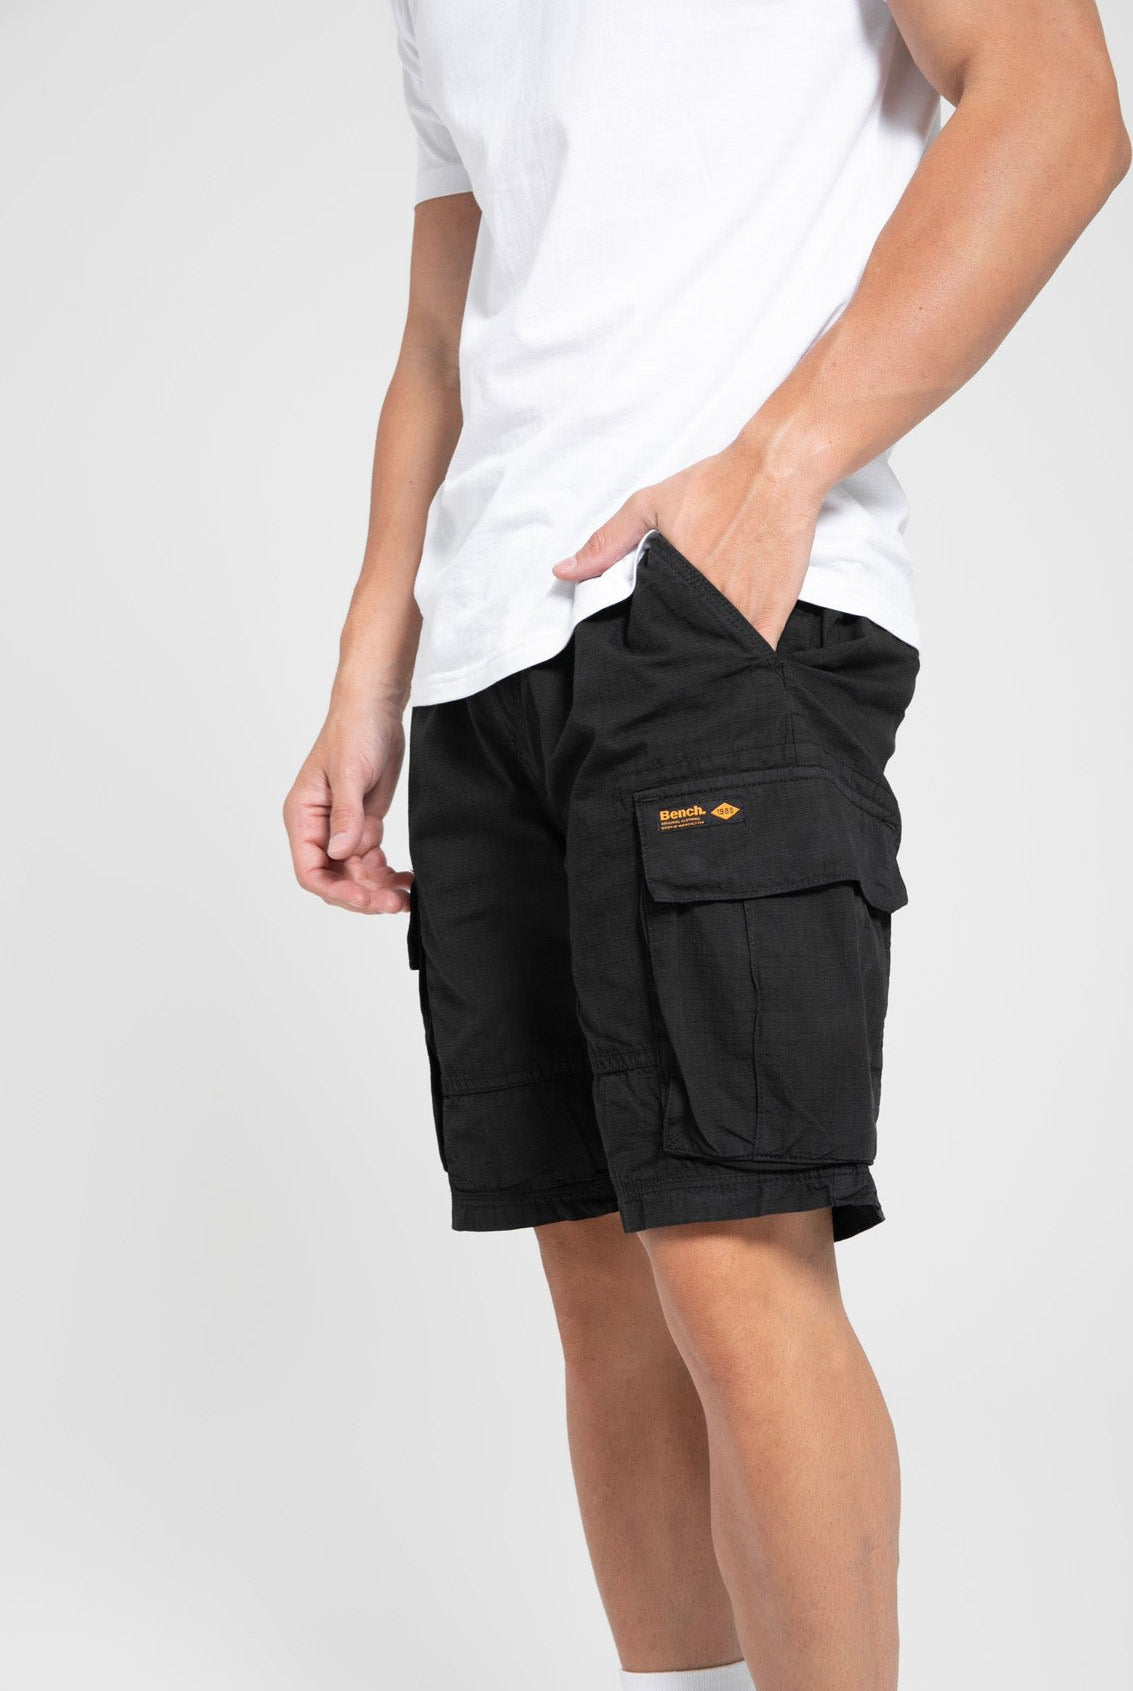 Mens 'VIDDI' Combat Shorts - BLACK - Shop at www.Bench.co.uk #LoveMyHood